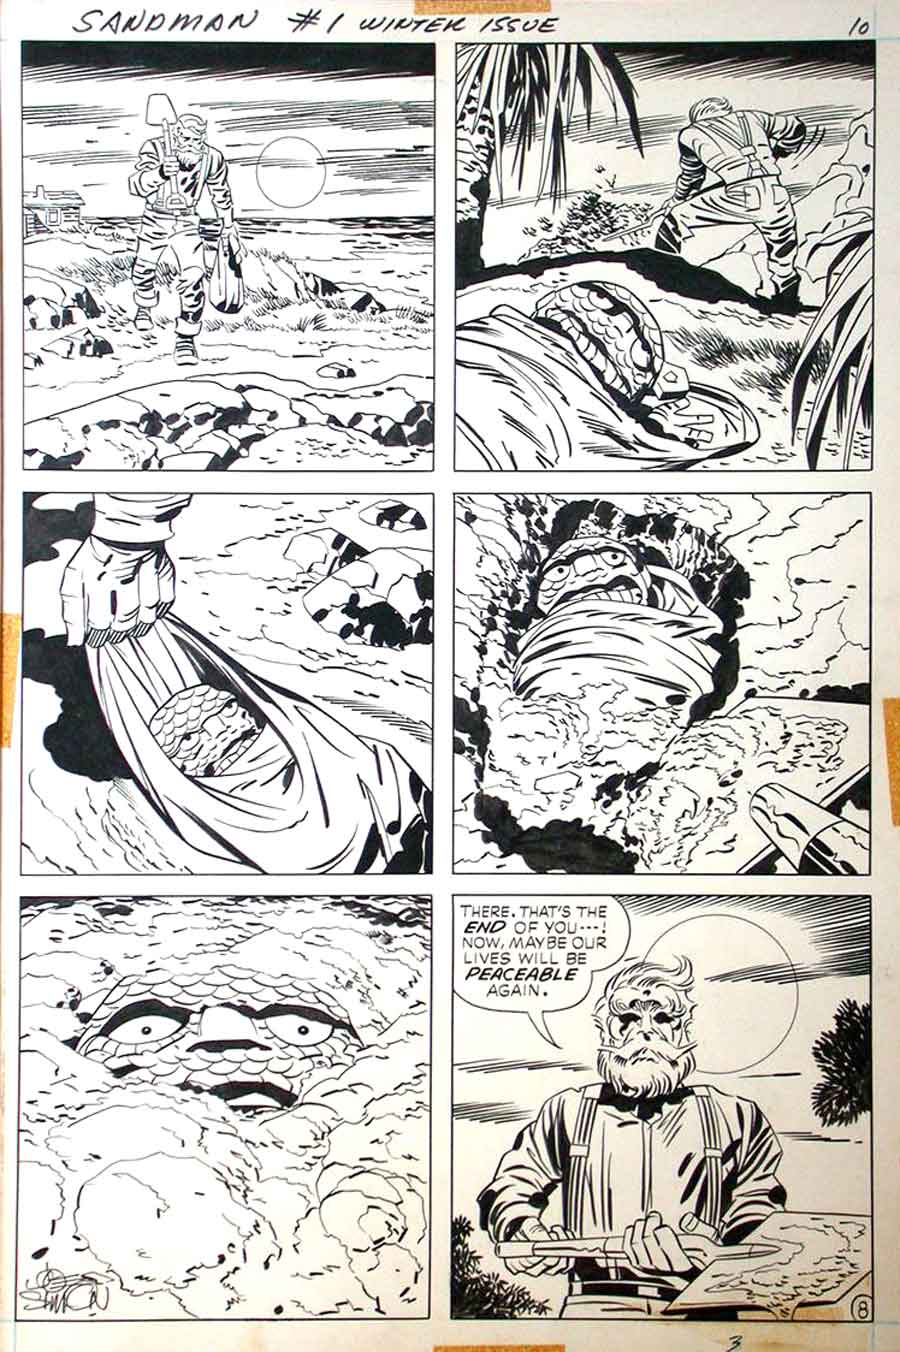 Jack Kirby original artwork dc 1970s bronze age comic book page - Sandman #1